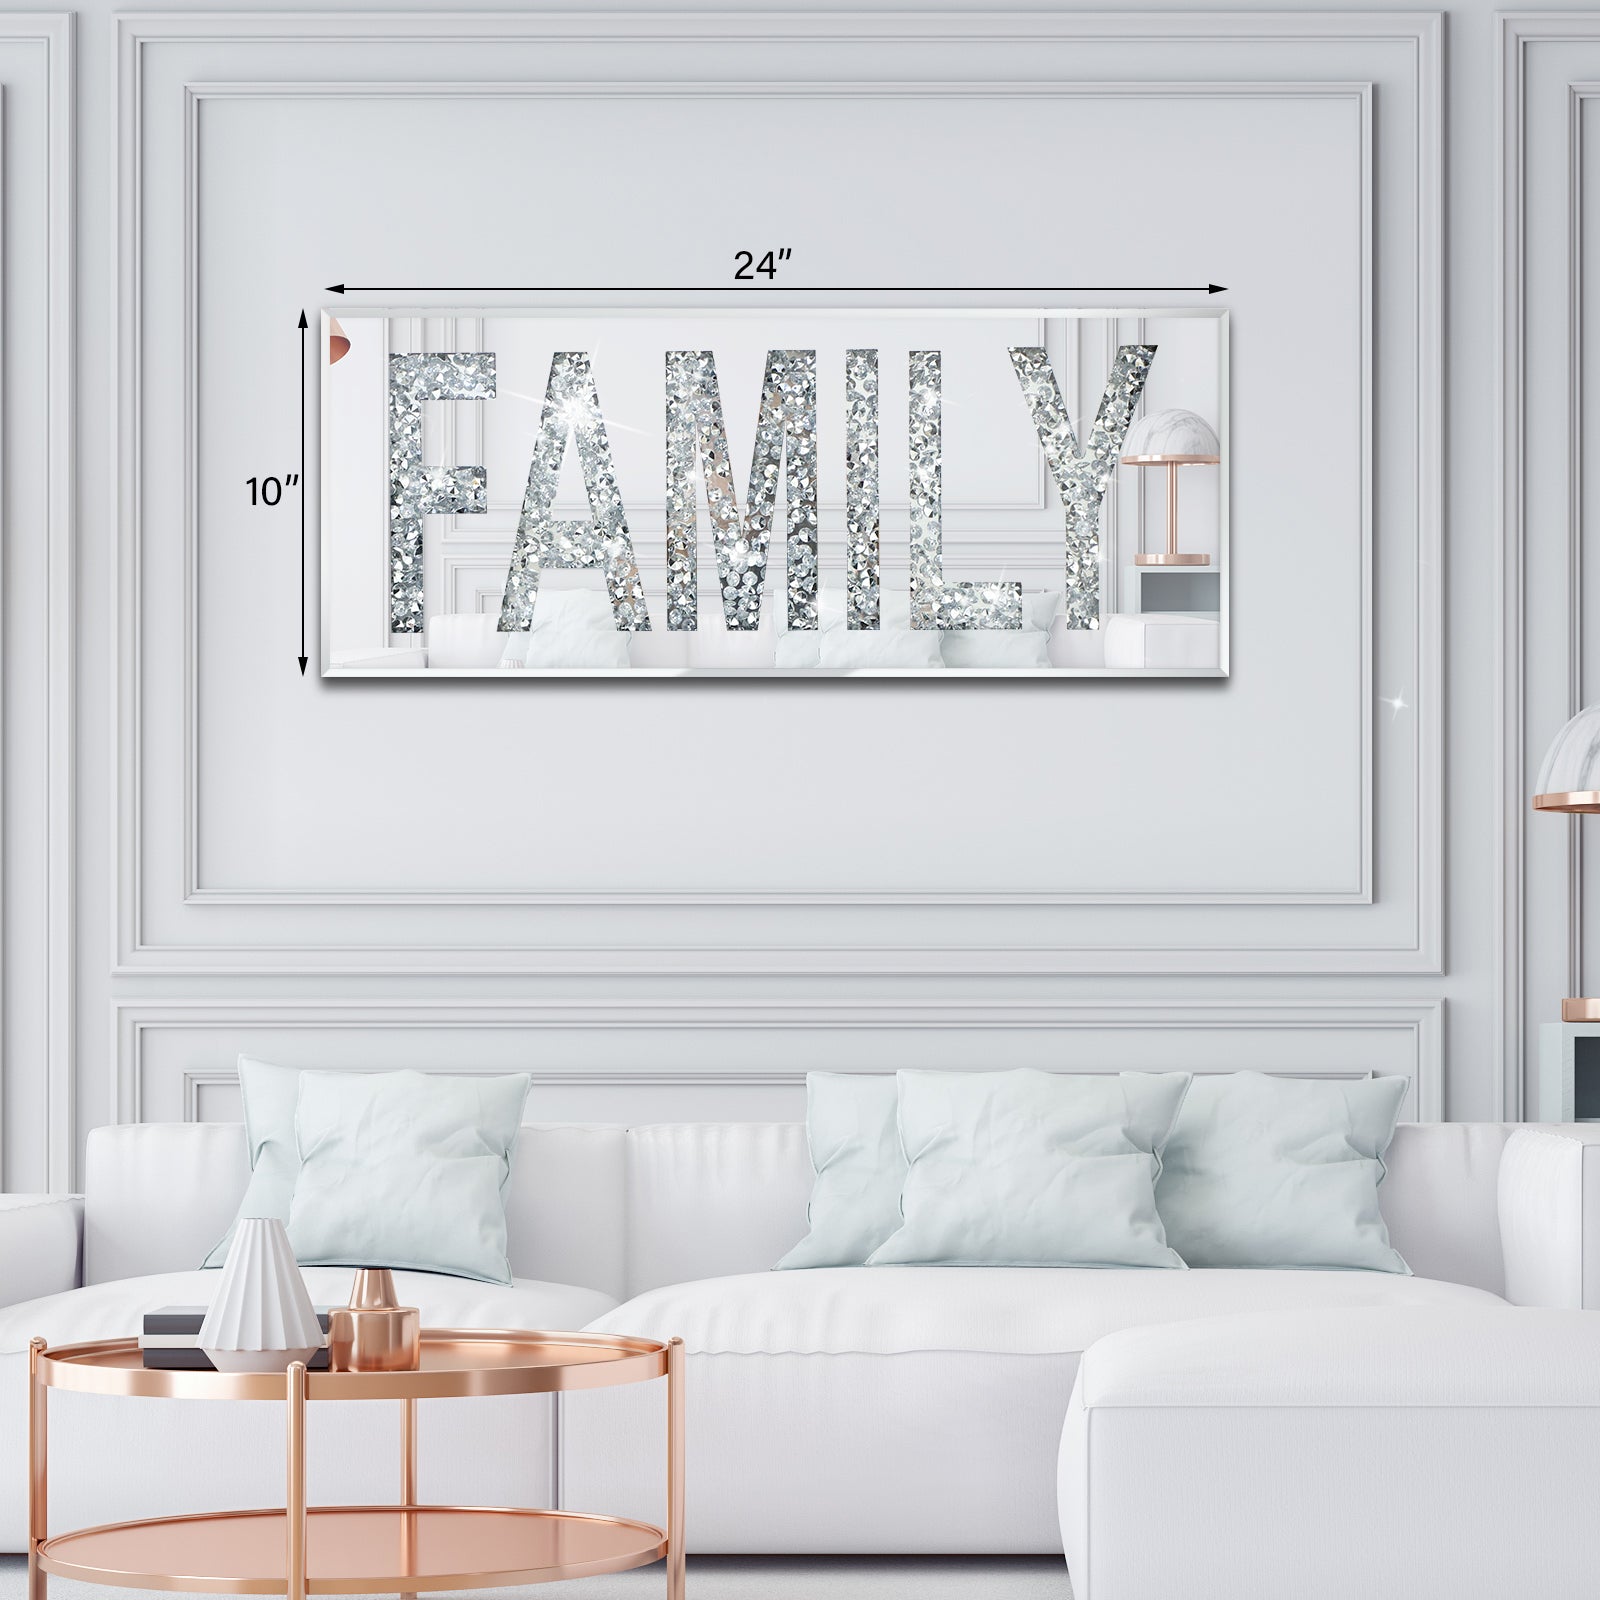 Glass Rectangle mirror | FAMILY sign | Minimalist Wall Art Decor